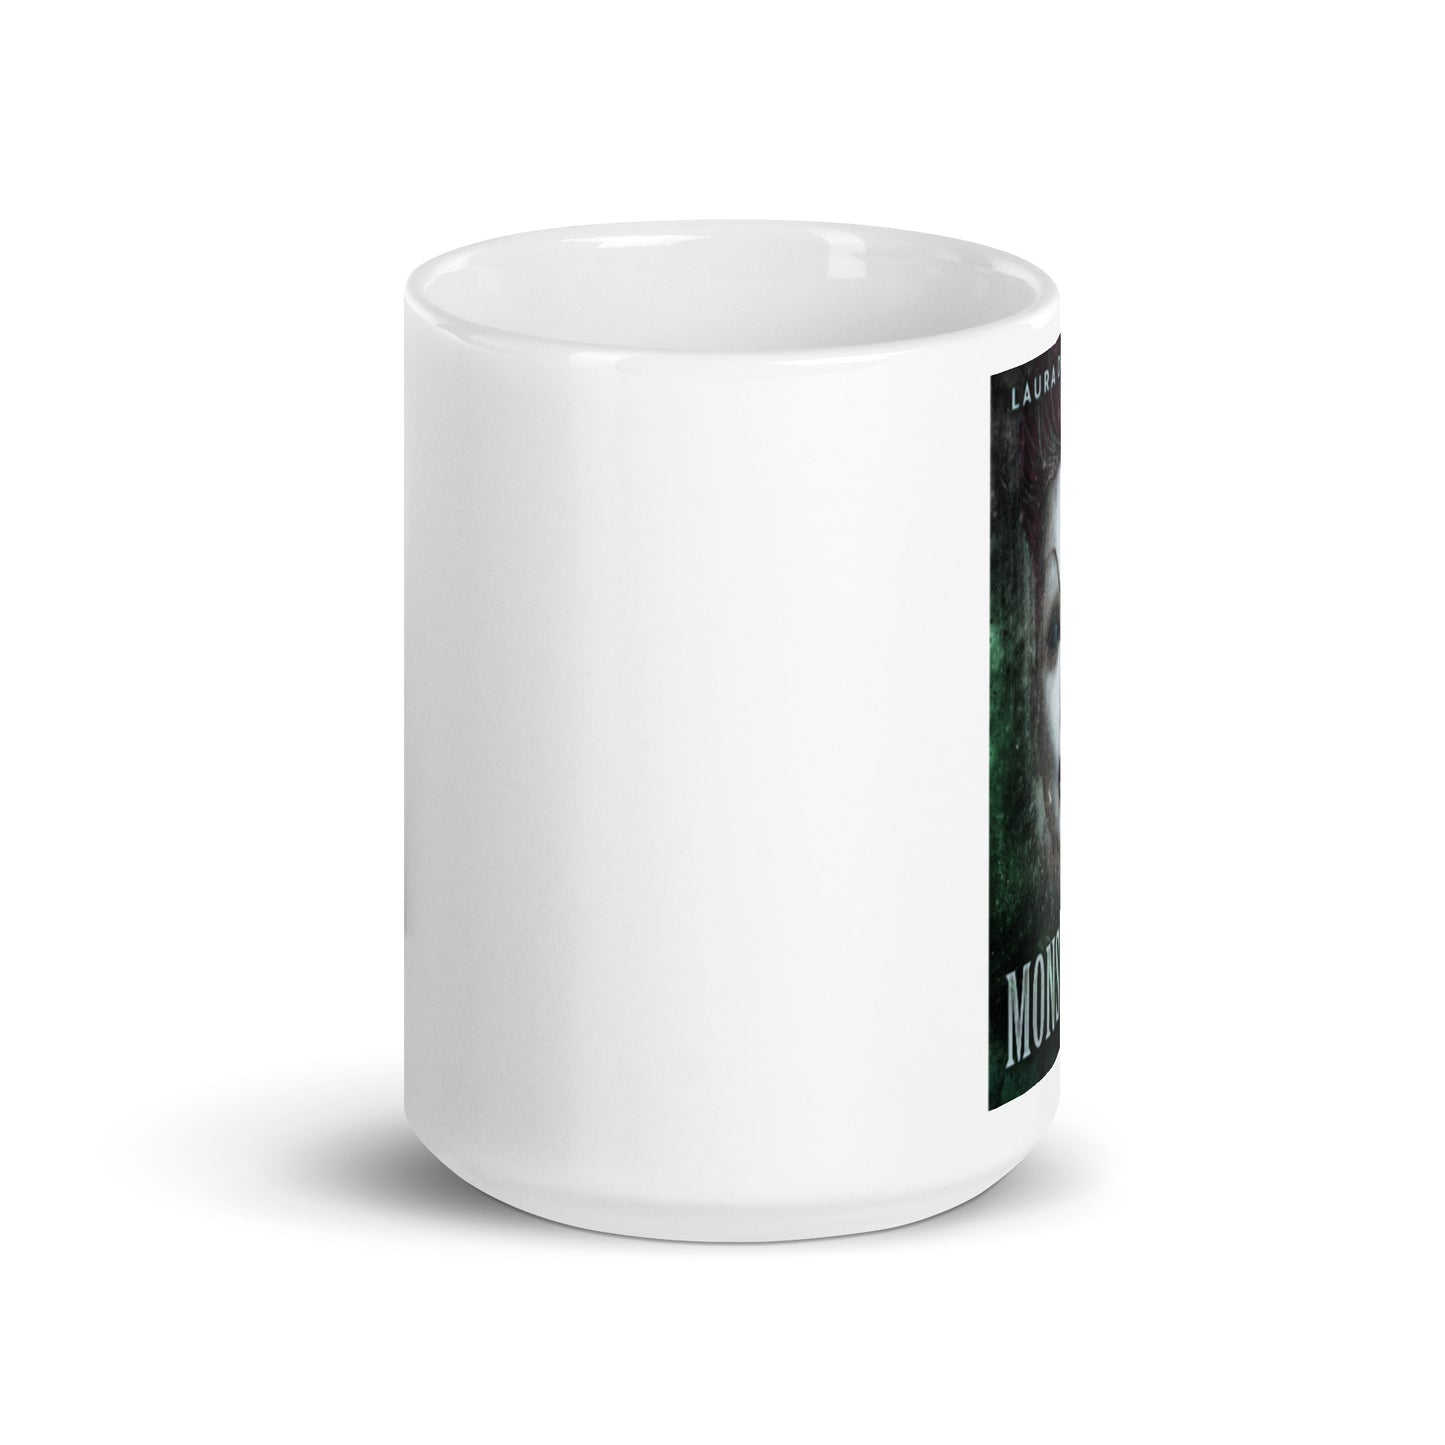 Monstrosity - White Coffee Mug